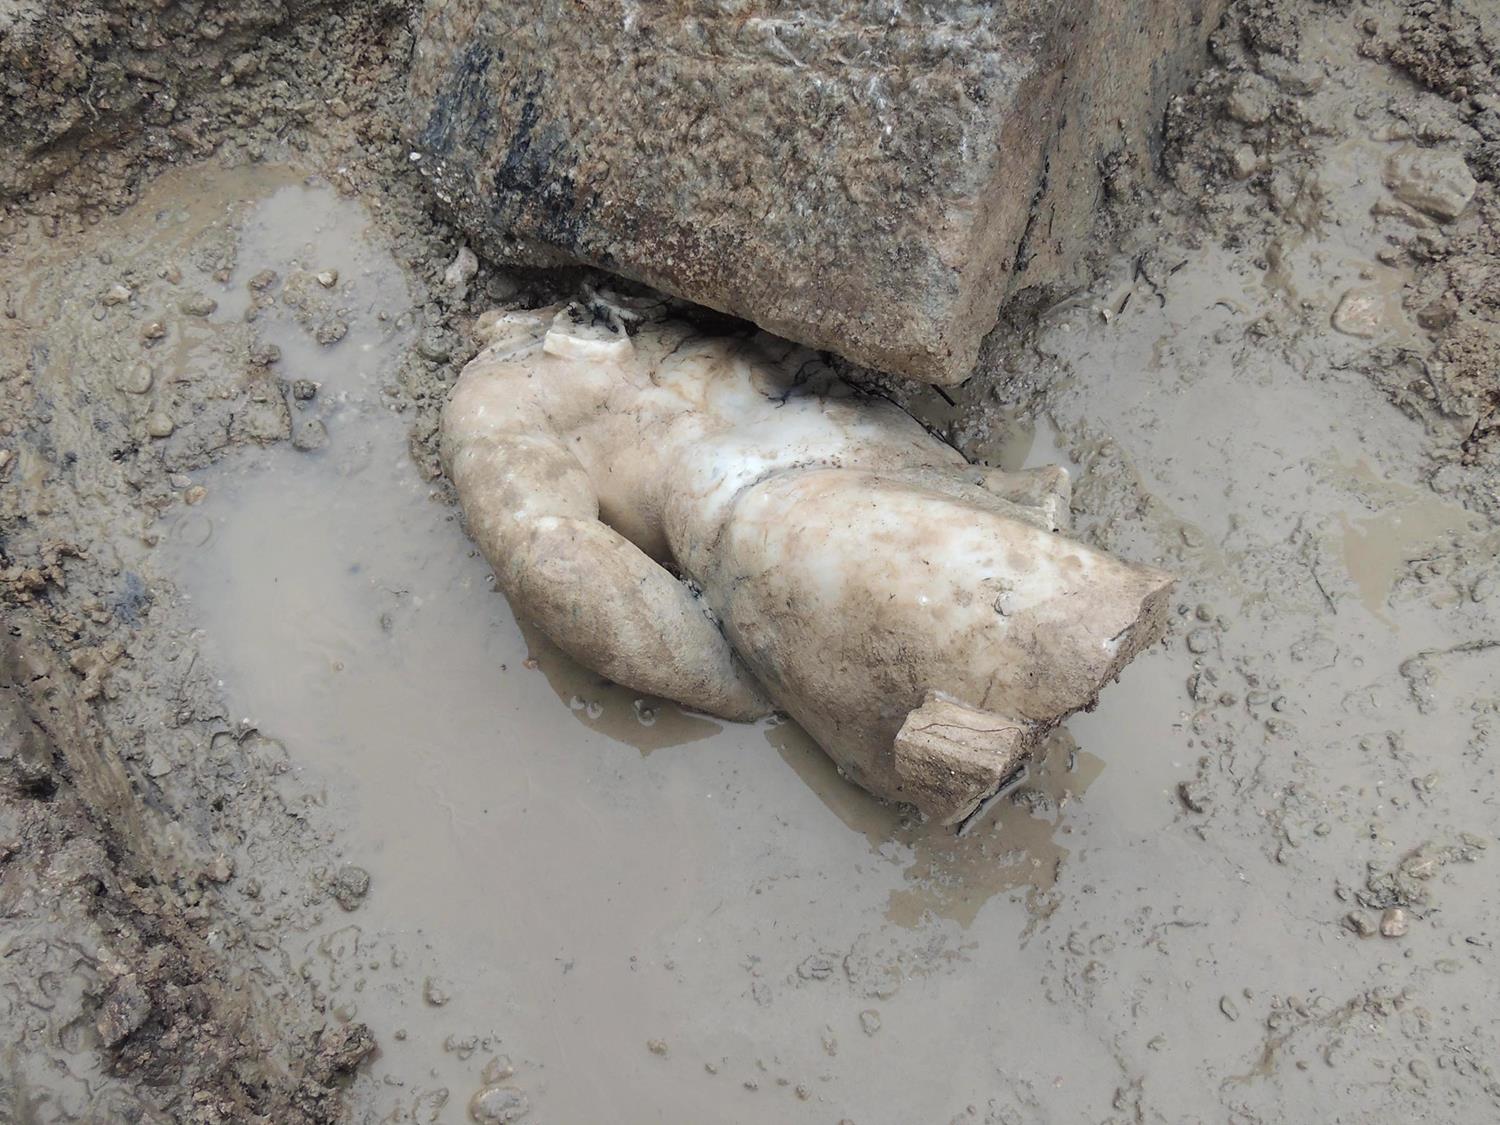 Aizanoi Antik Kenti kazsnda 'Herkl'n mermer heykeli bulundu